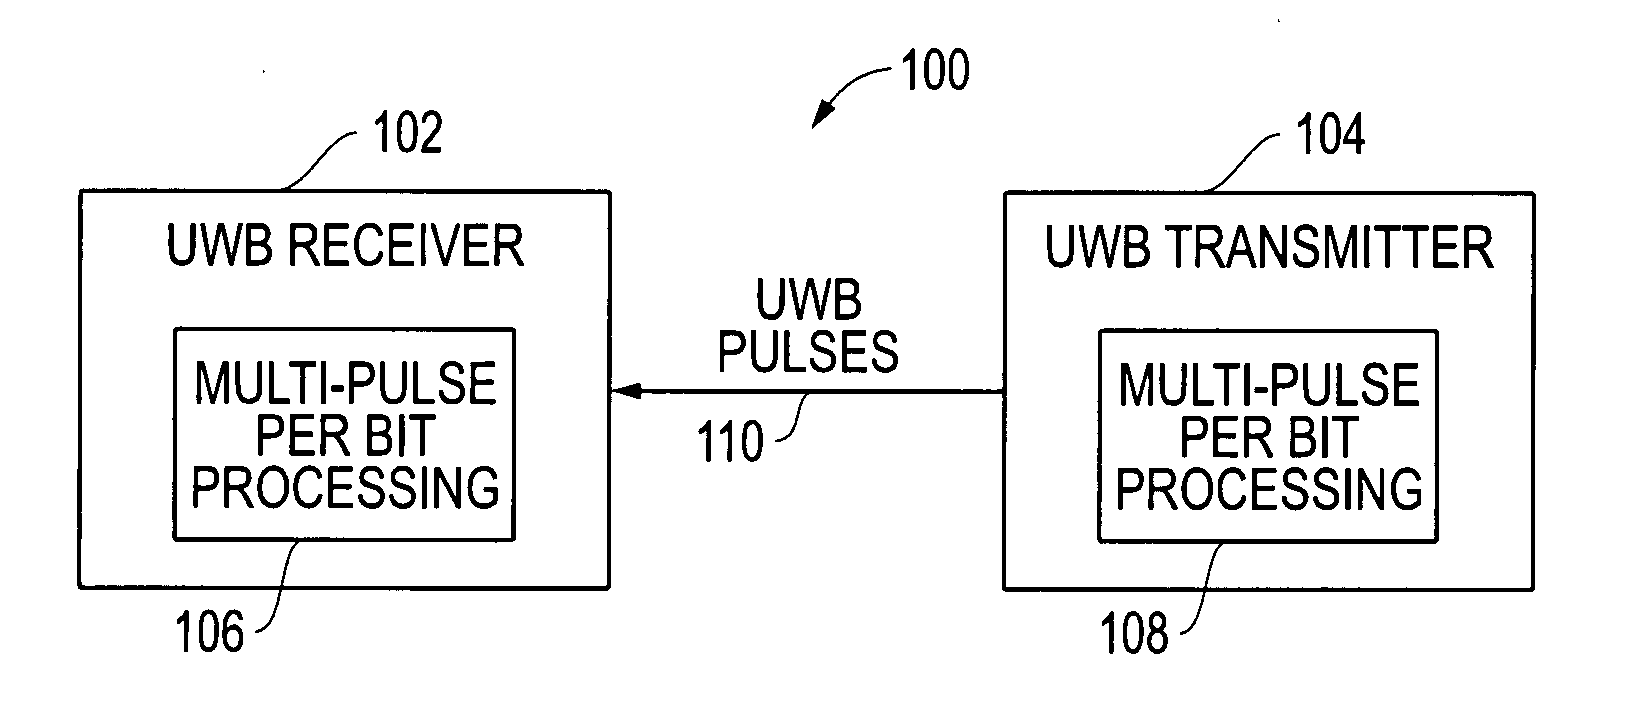 Pulse-level interleaving for UWB systems